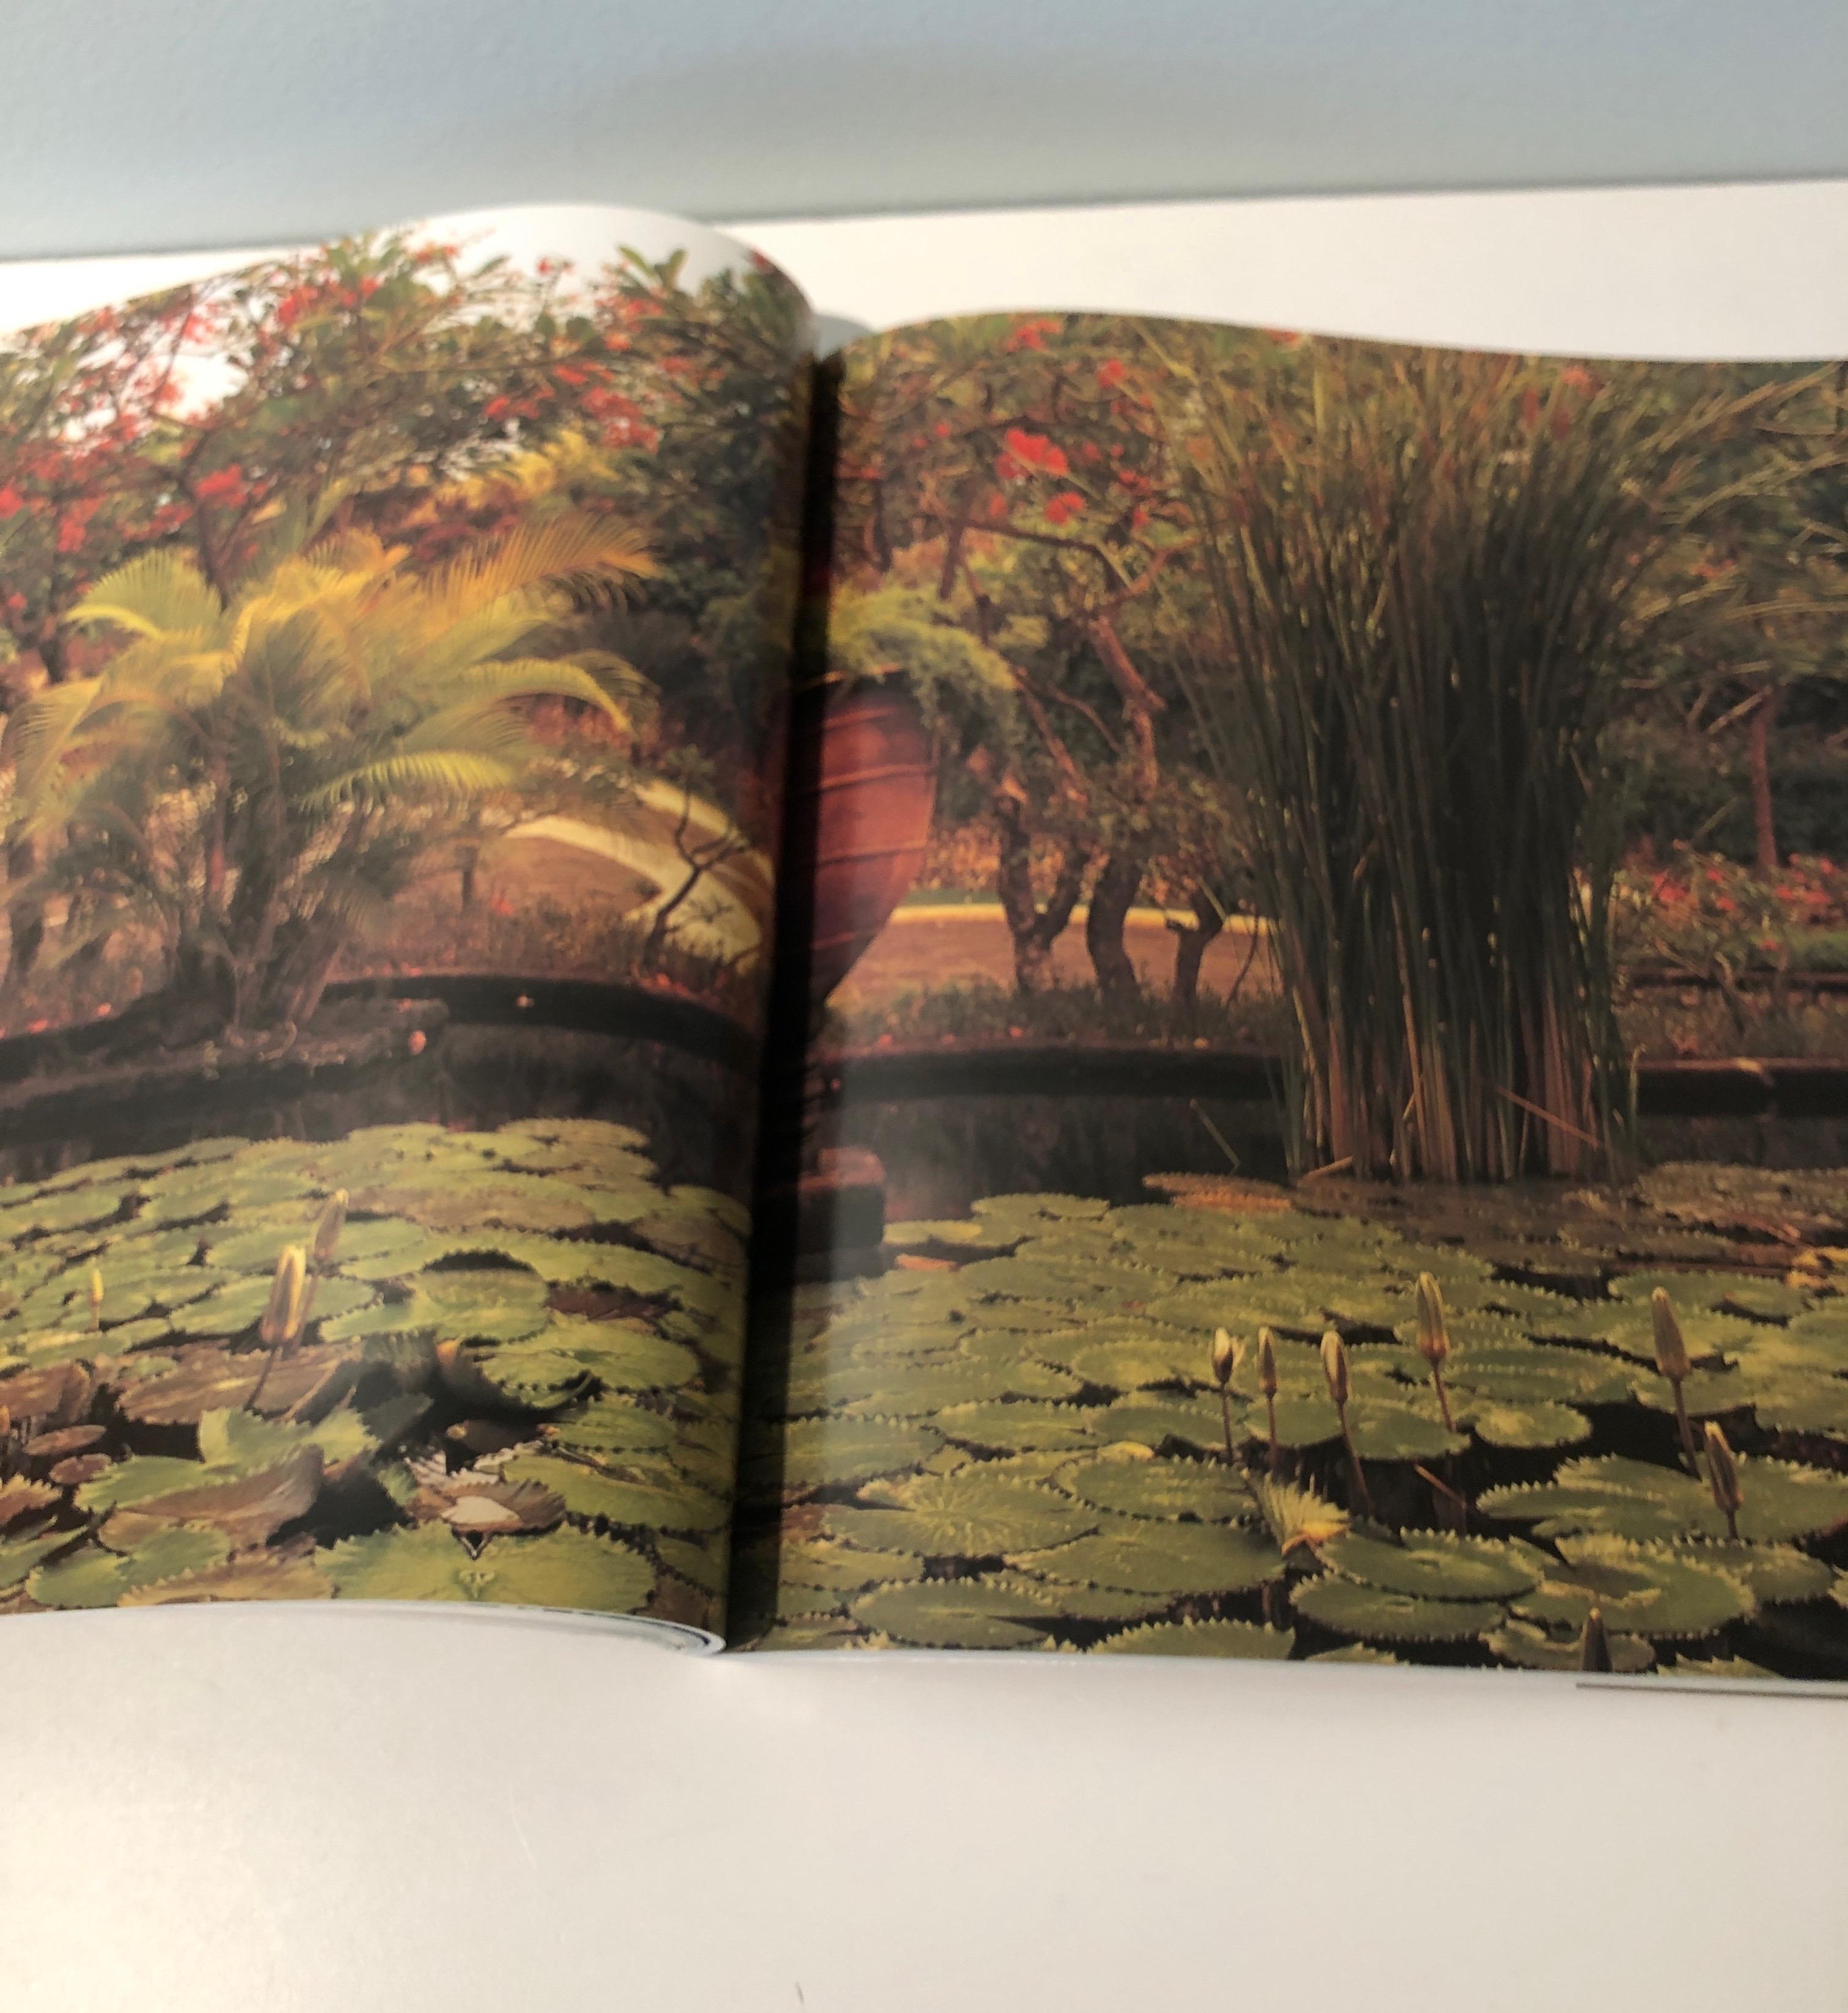 Contemporary Tropical Garden Design Paperback Decorating Book